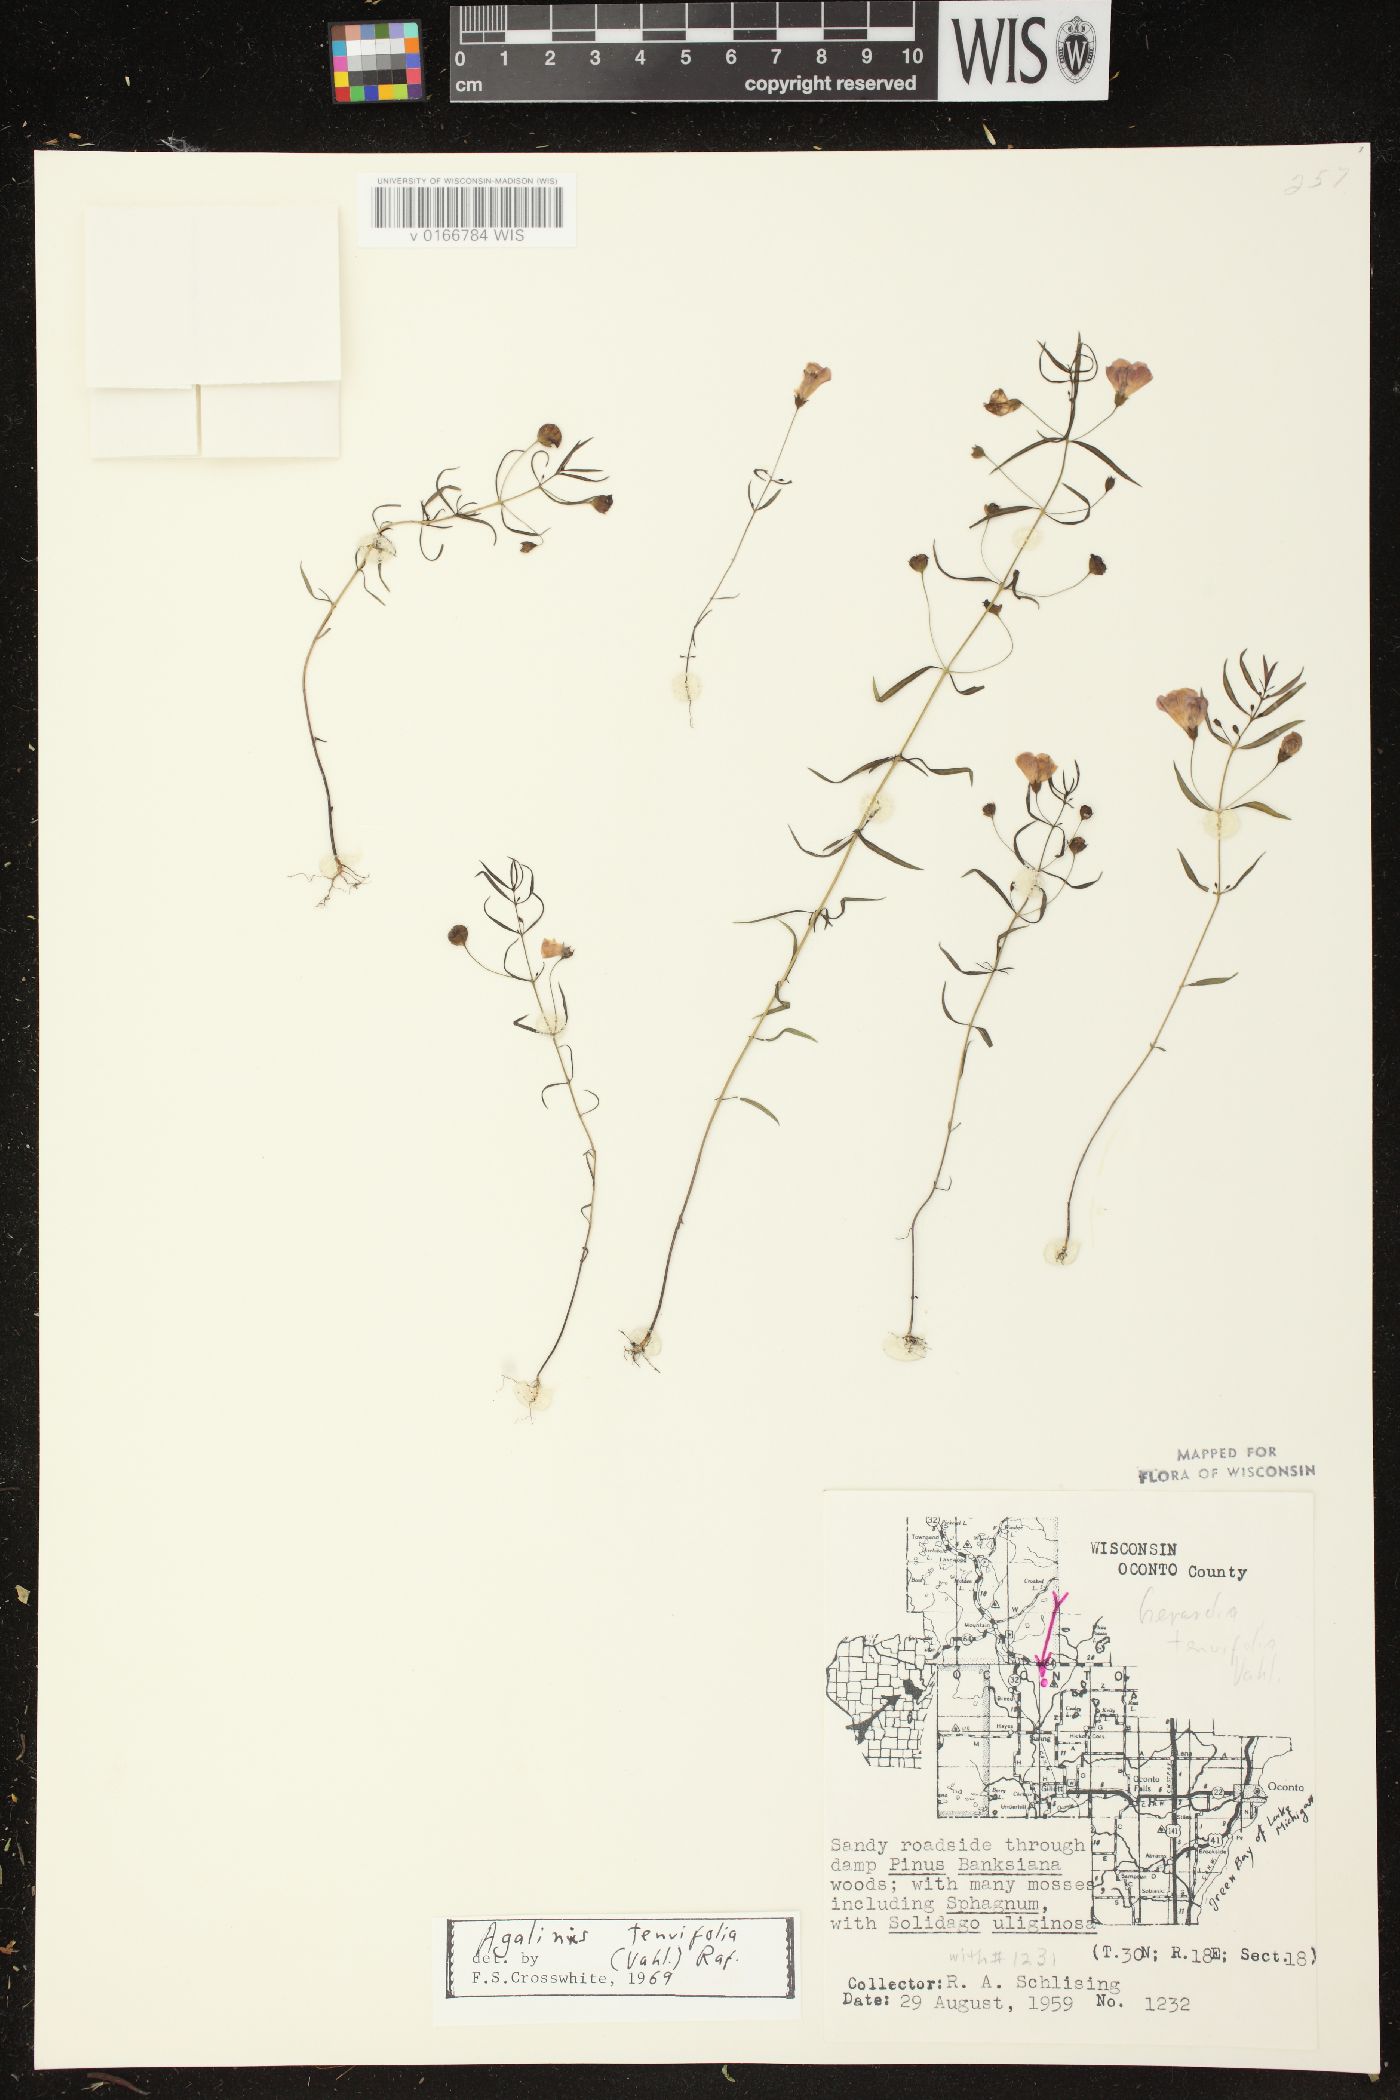 Agalinis tenuifolia image